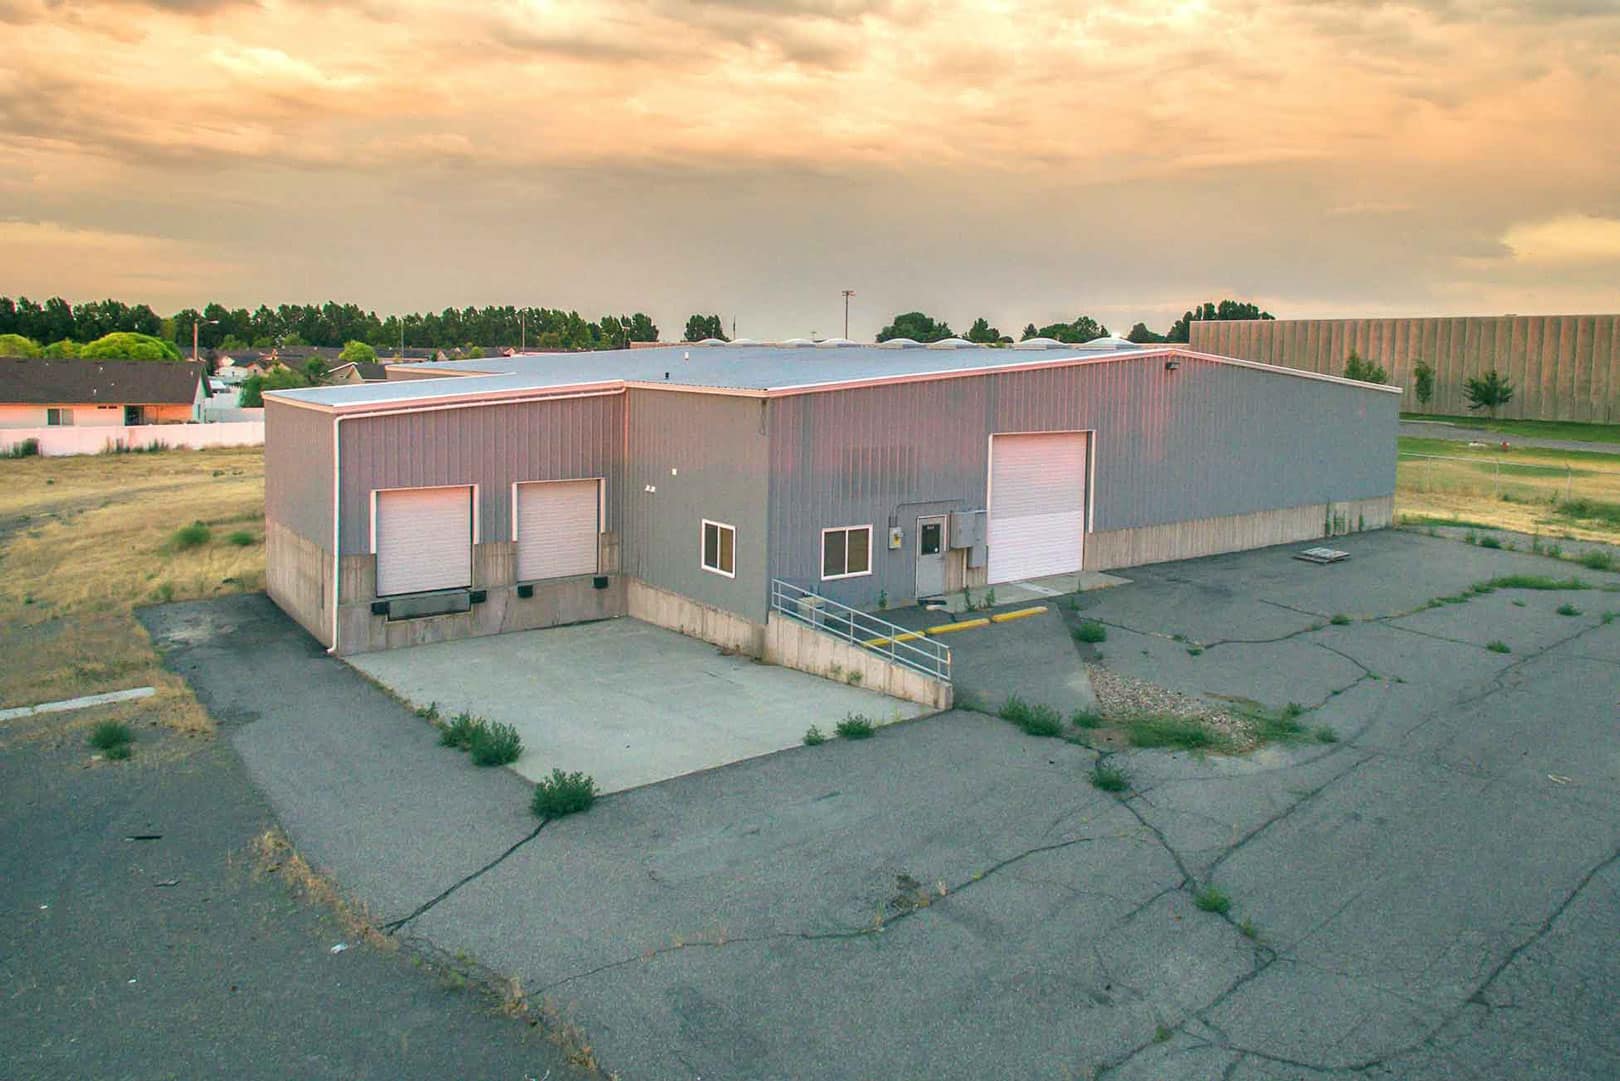 595 Washington is a Tenant-in-Tow Industrial Property in Twin Falls, Idaho